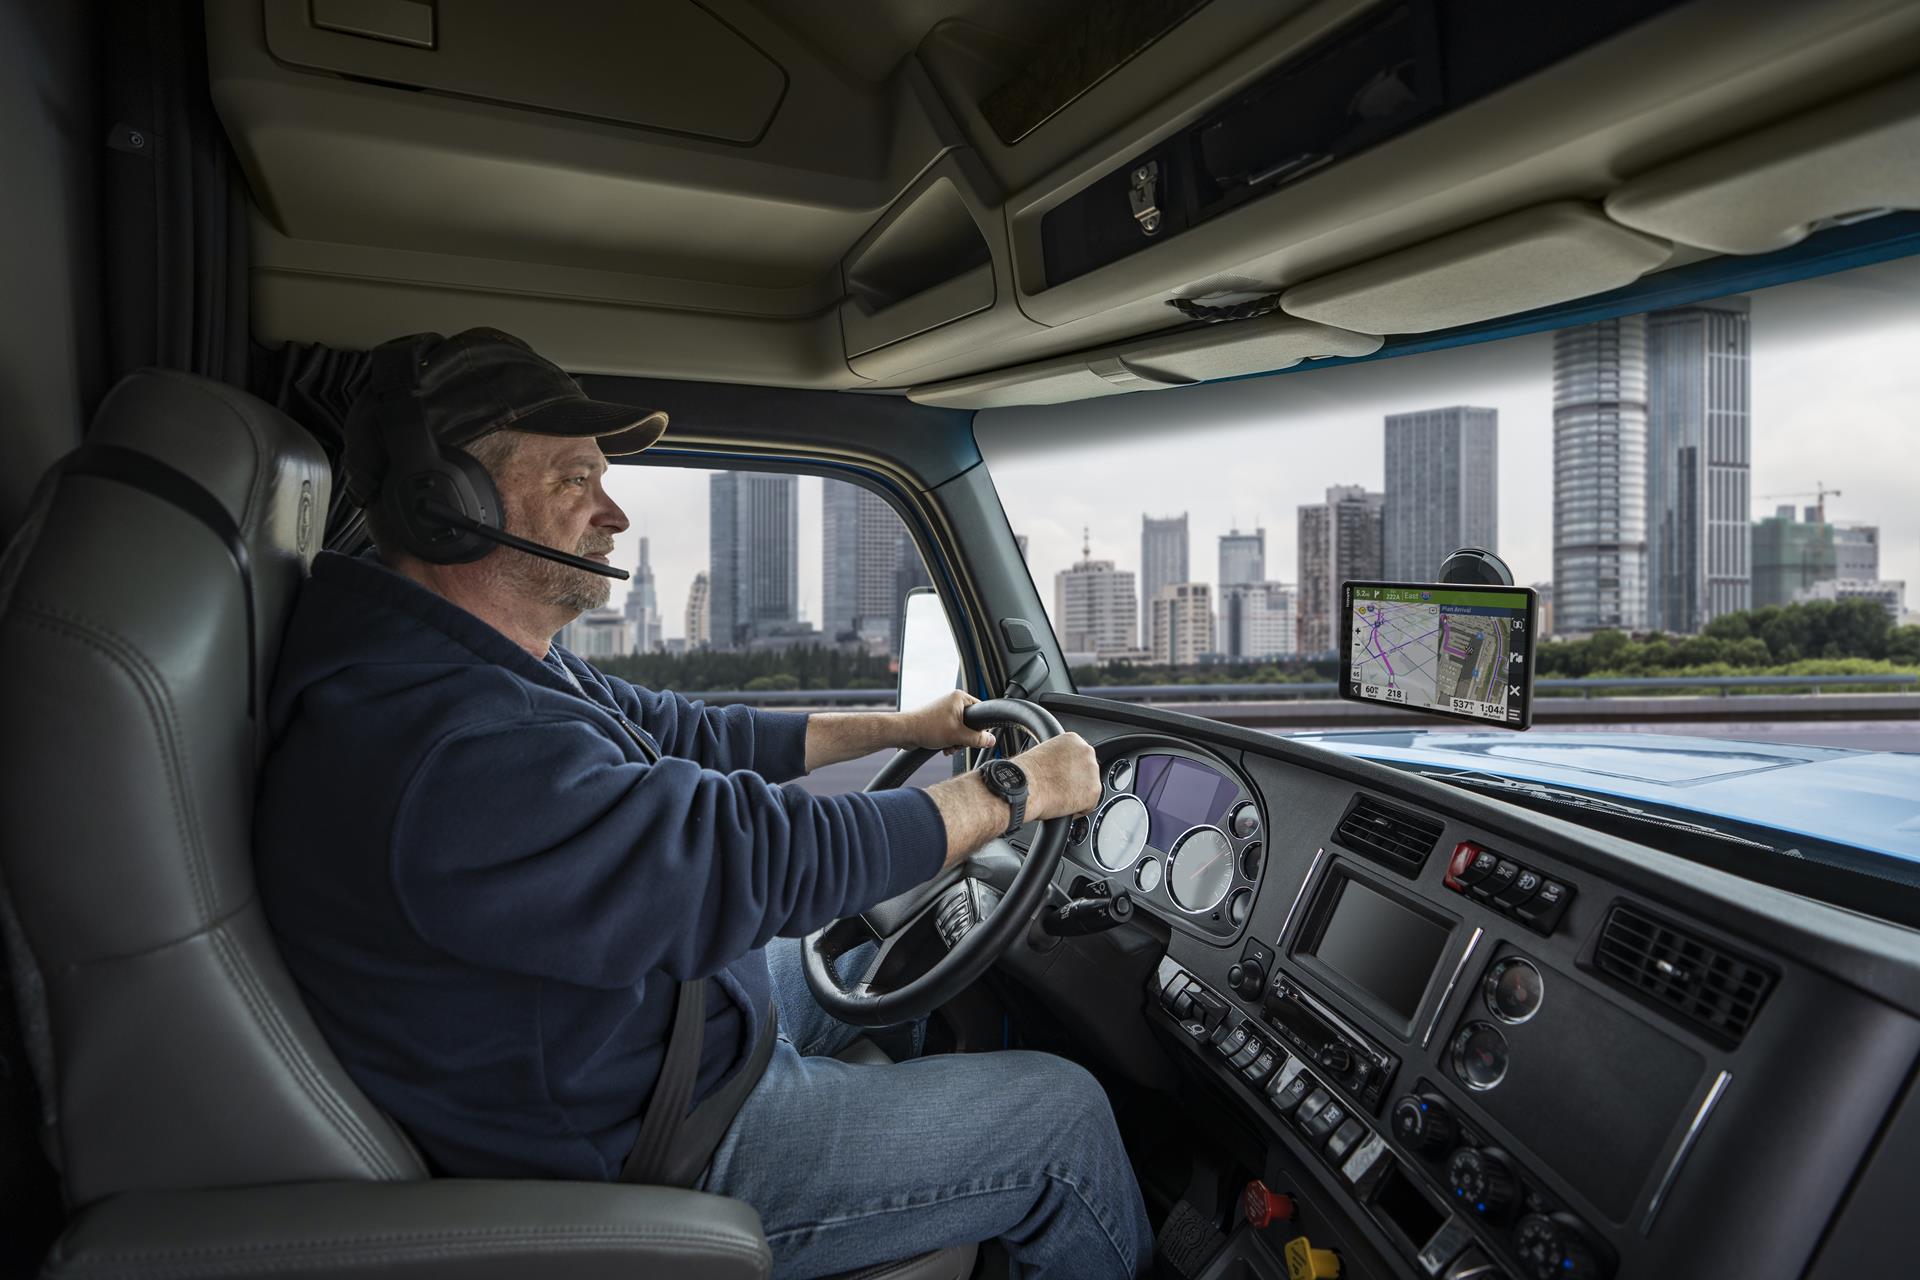 Garmin dēzl Headset 200 Premium 2-in-1 Trucking Headset